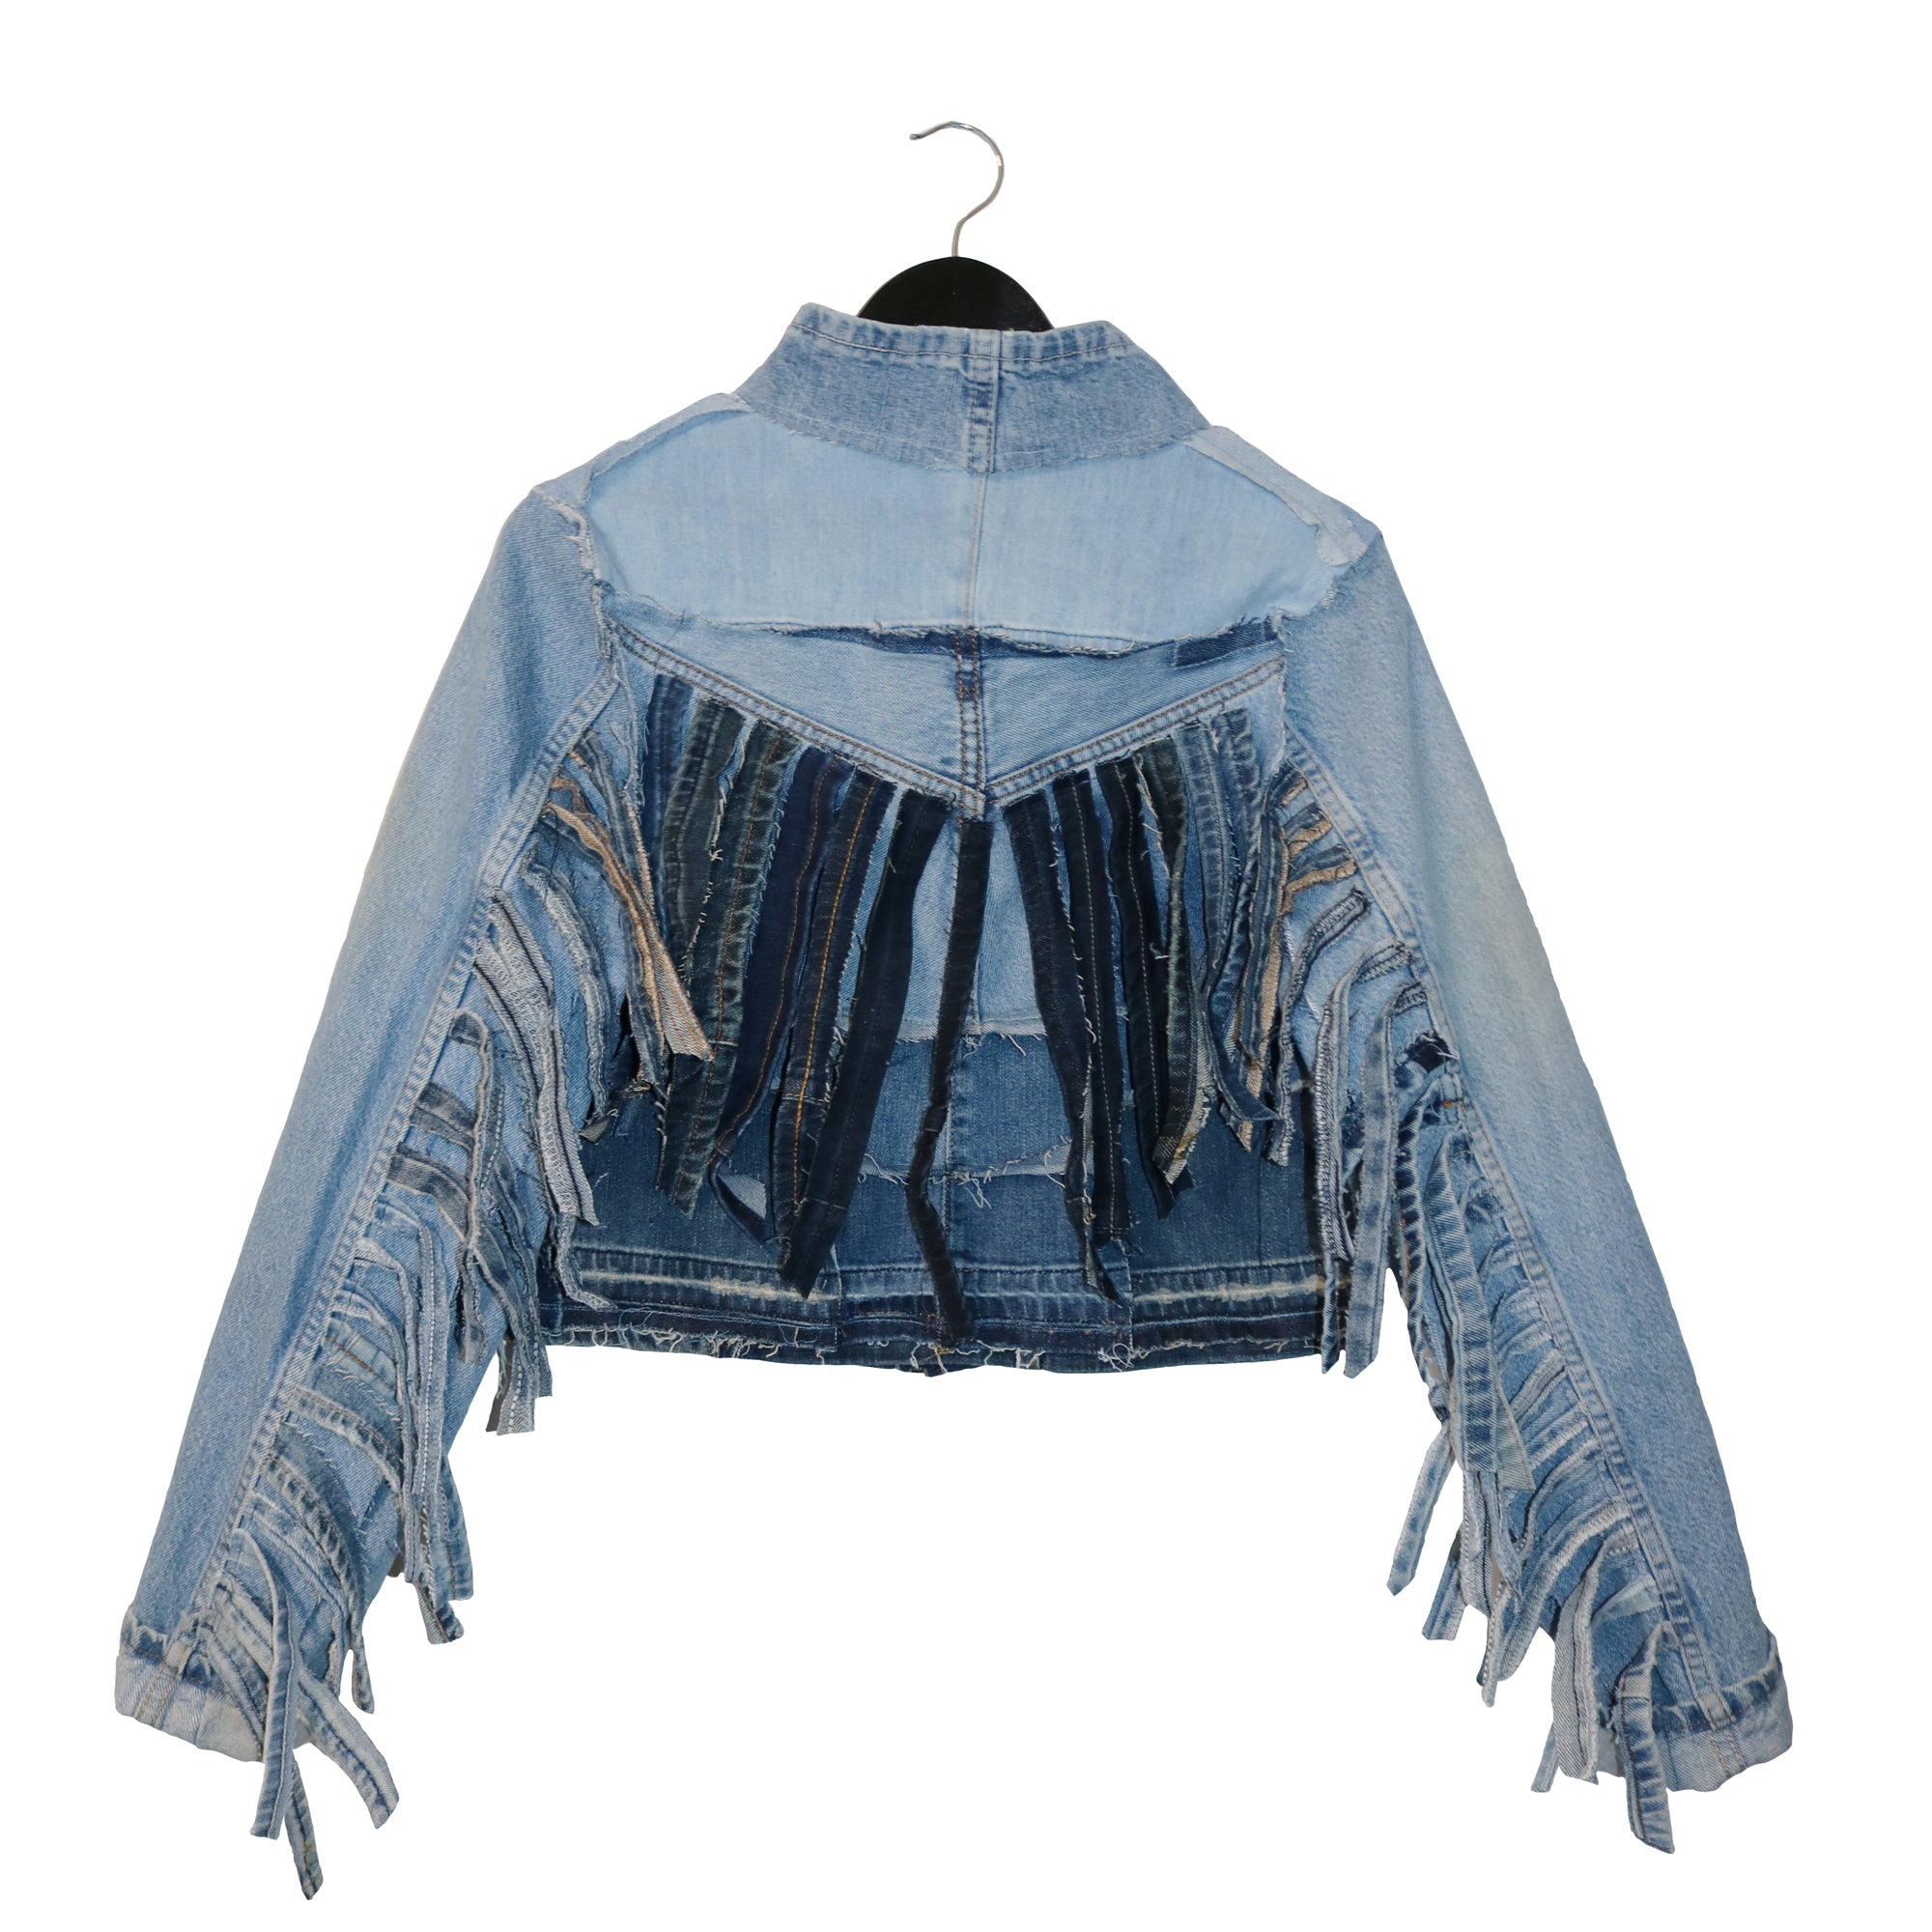 #REMIXbyStevieLeigh eco friendly light blue denim jacket with fringe